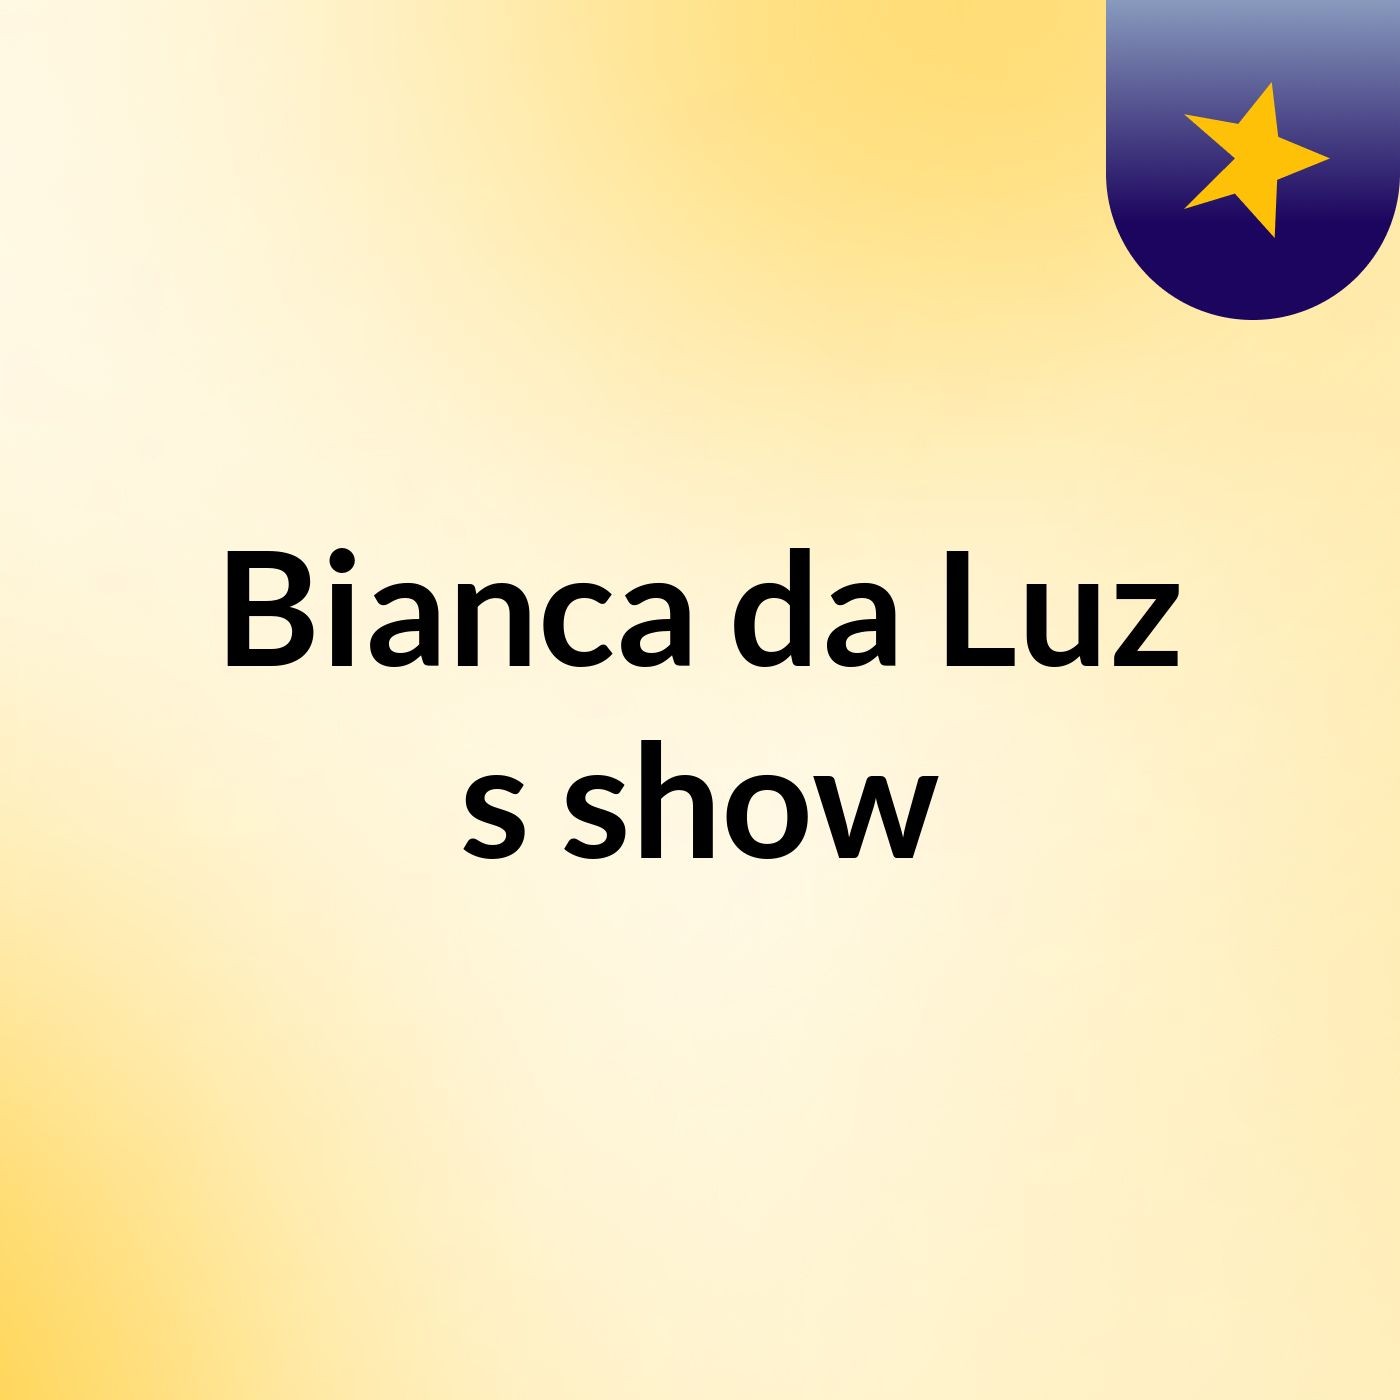 Bianca da Luz's show